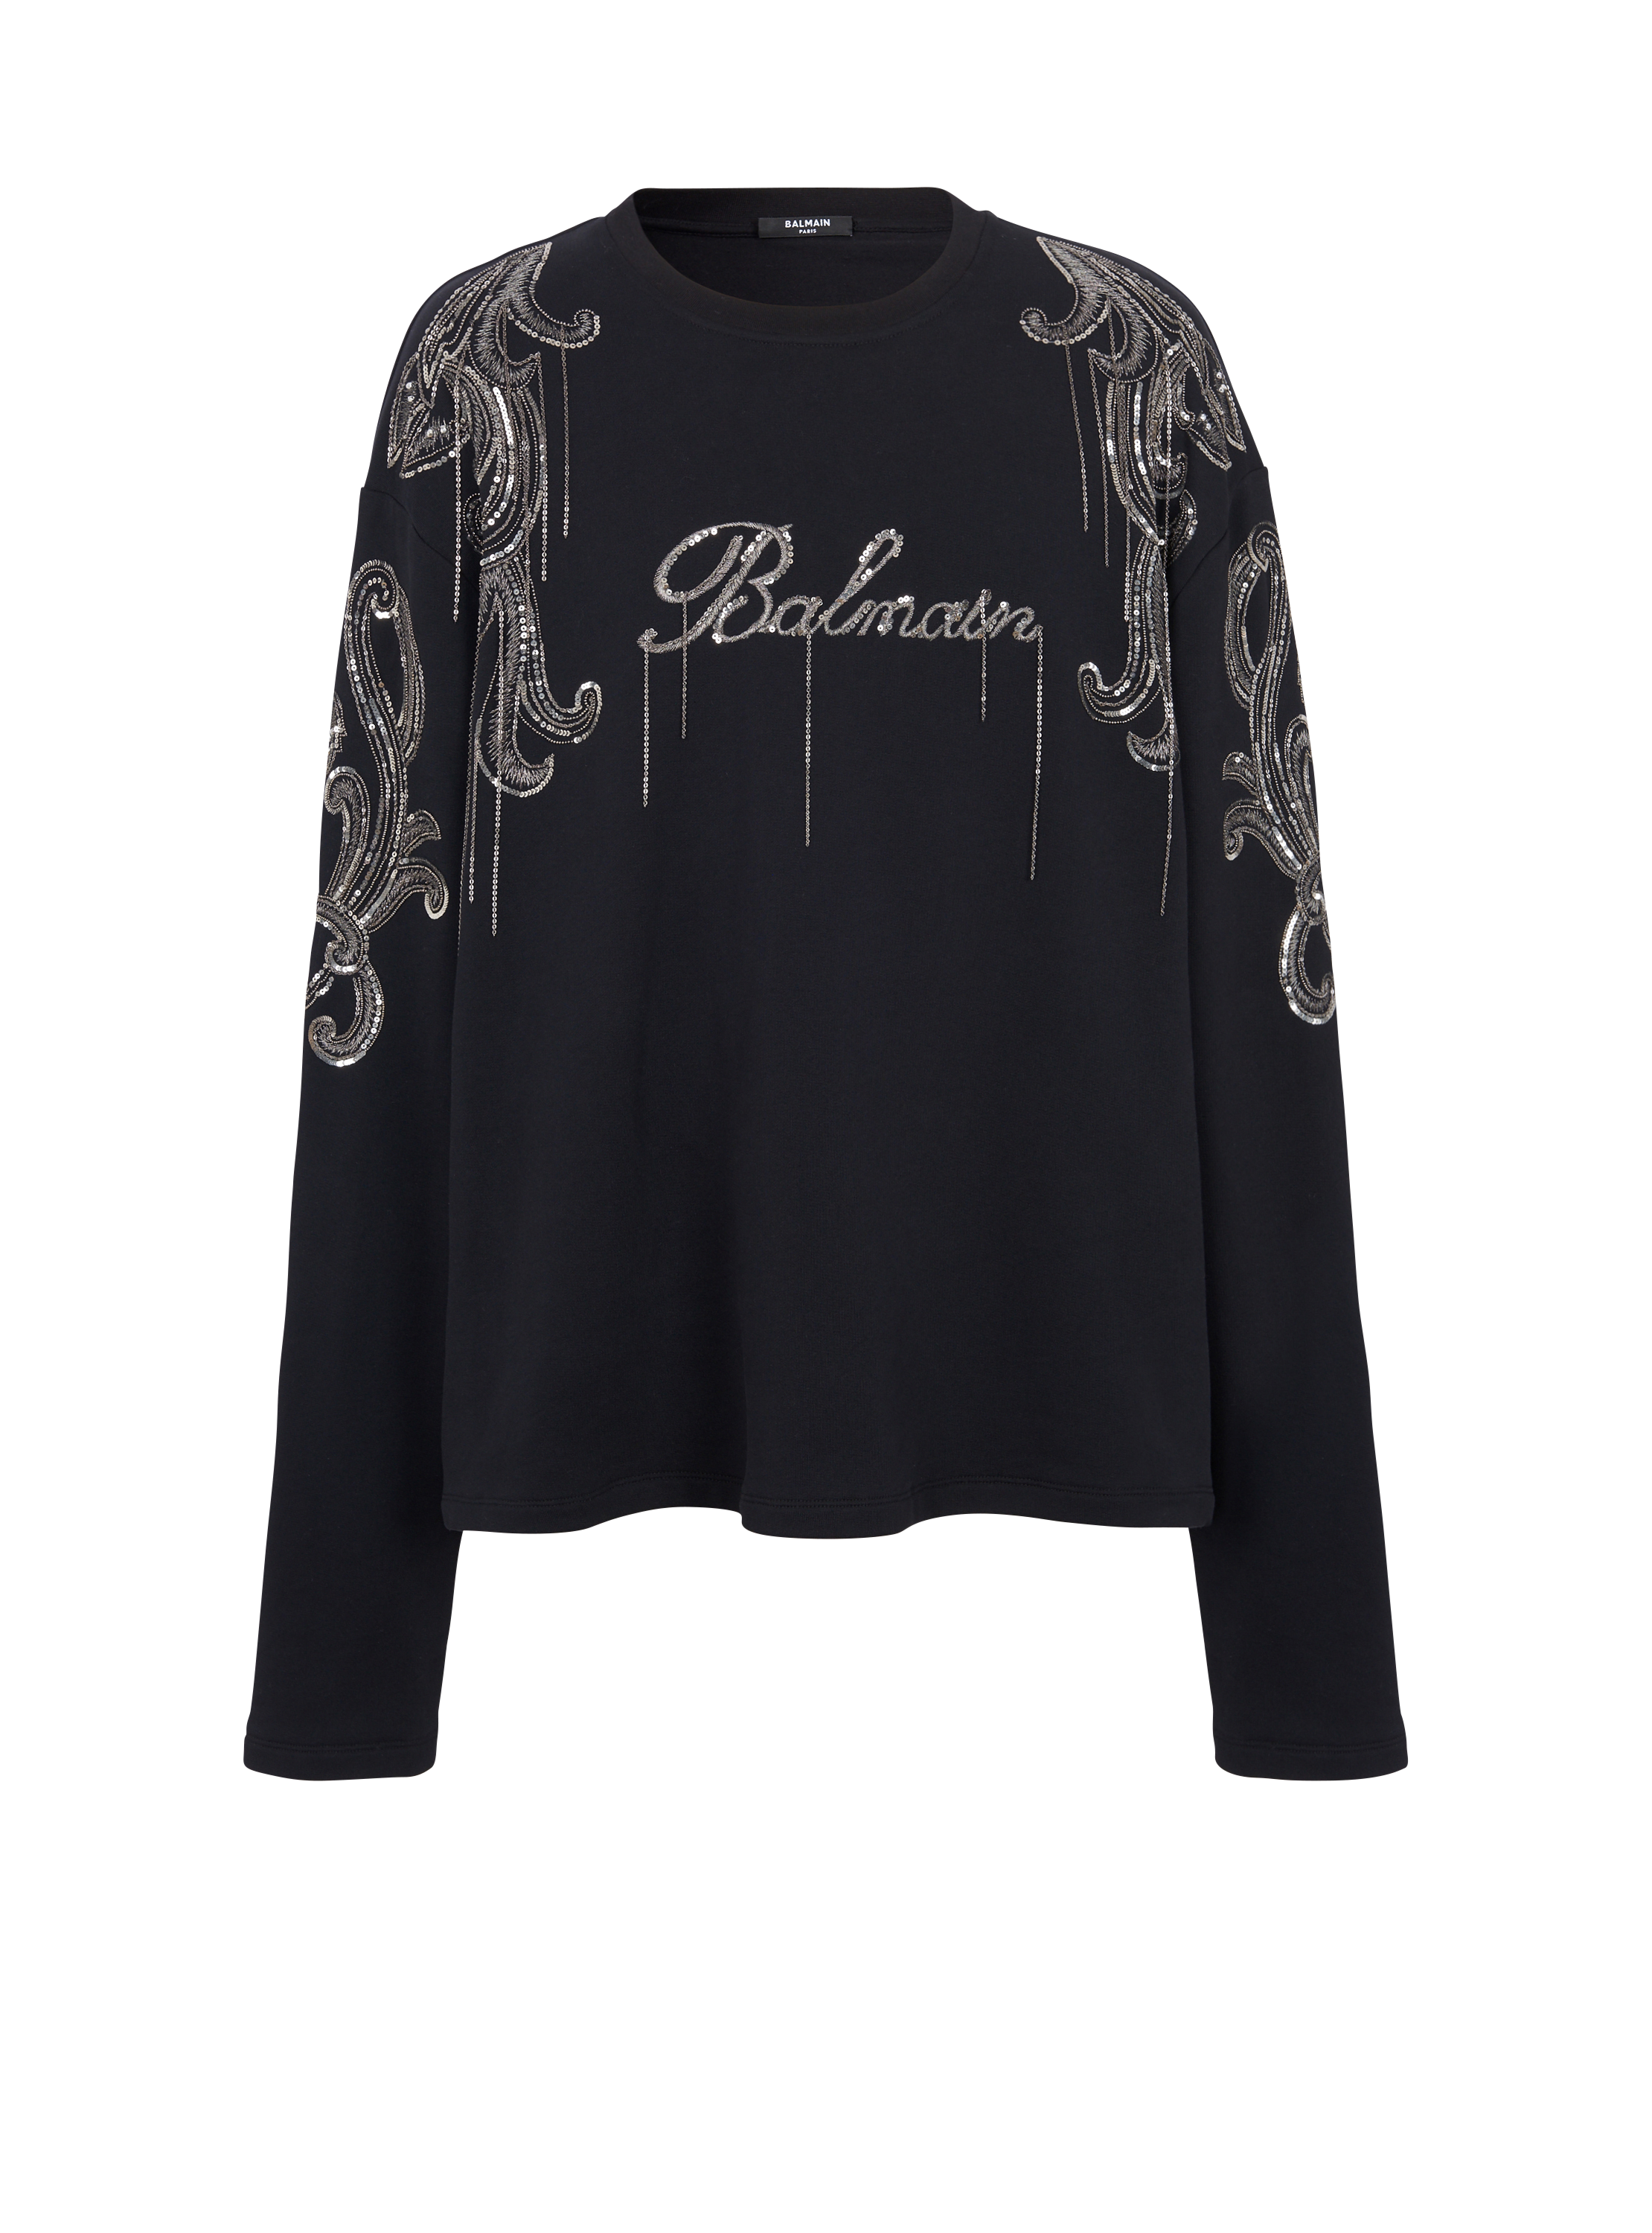 Besticktes Balmain Signature Sweatshirt mit Ketten, schwarz, hi-res